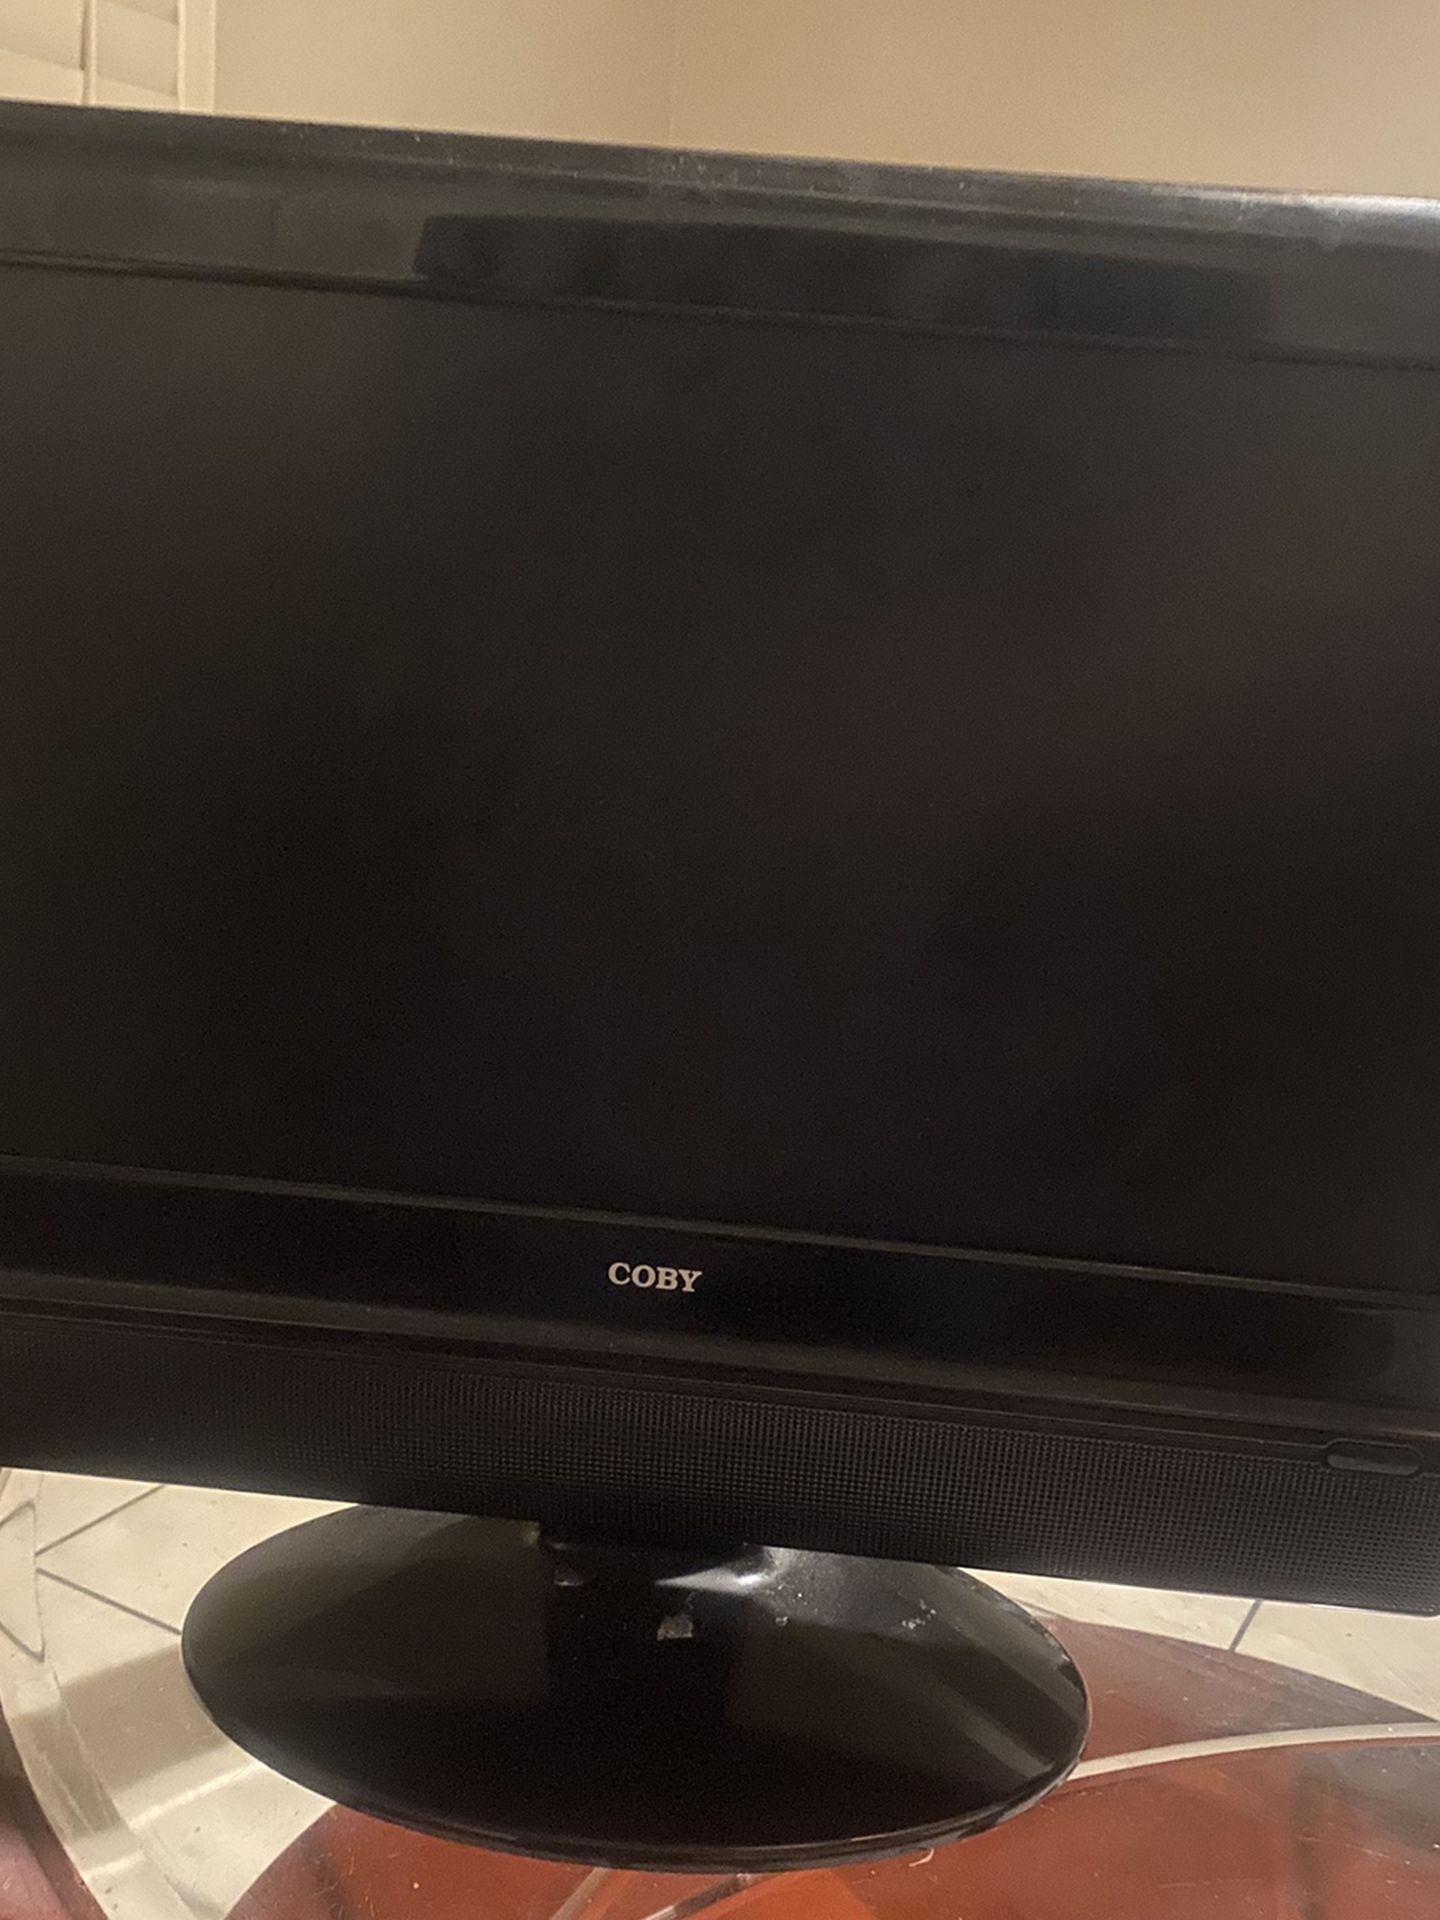 Tv Screen/ Computer monitor